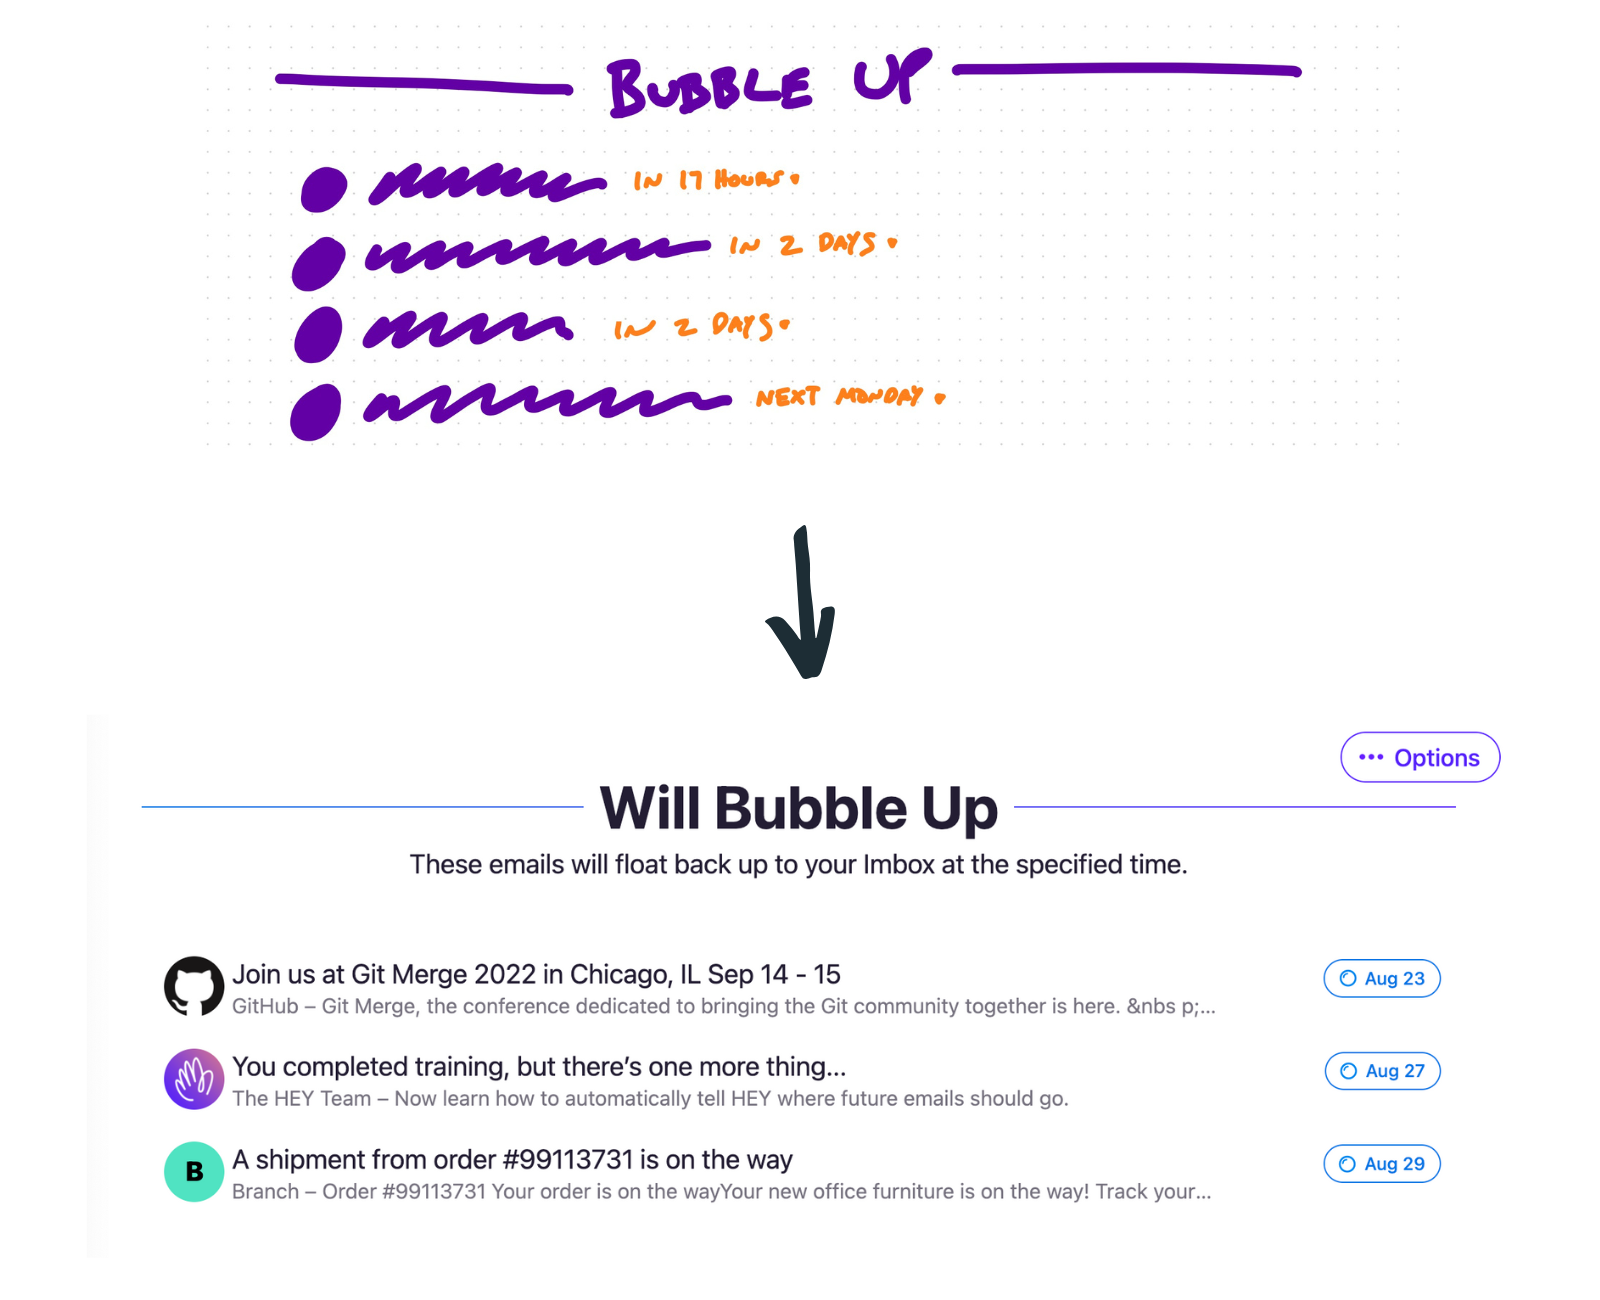 Bubble Up takes shape